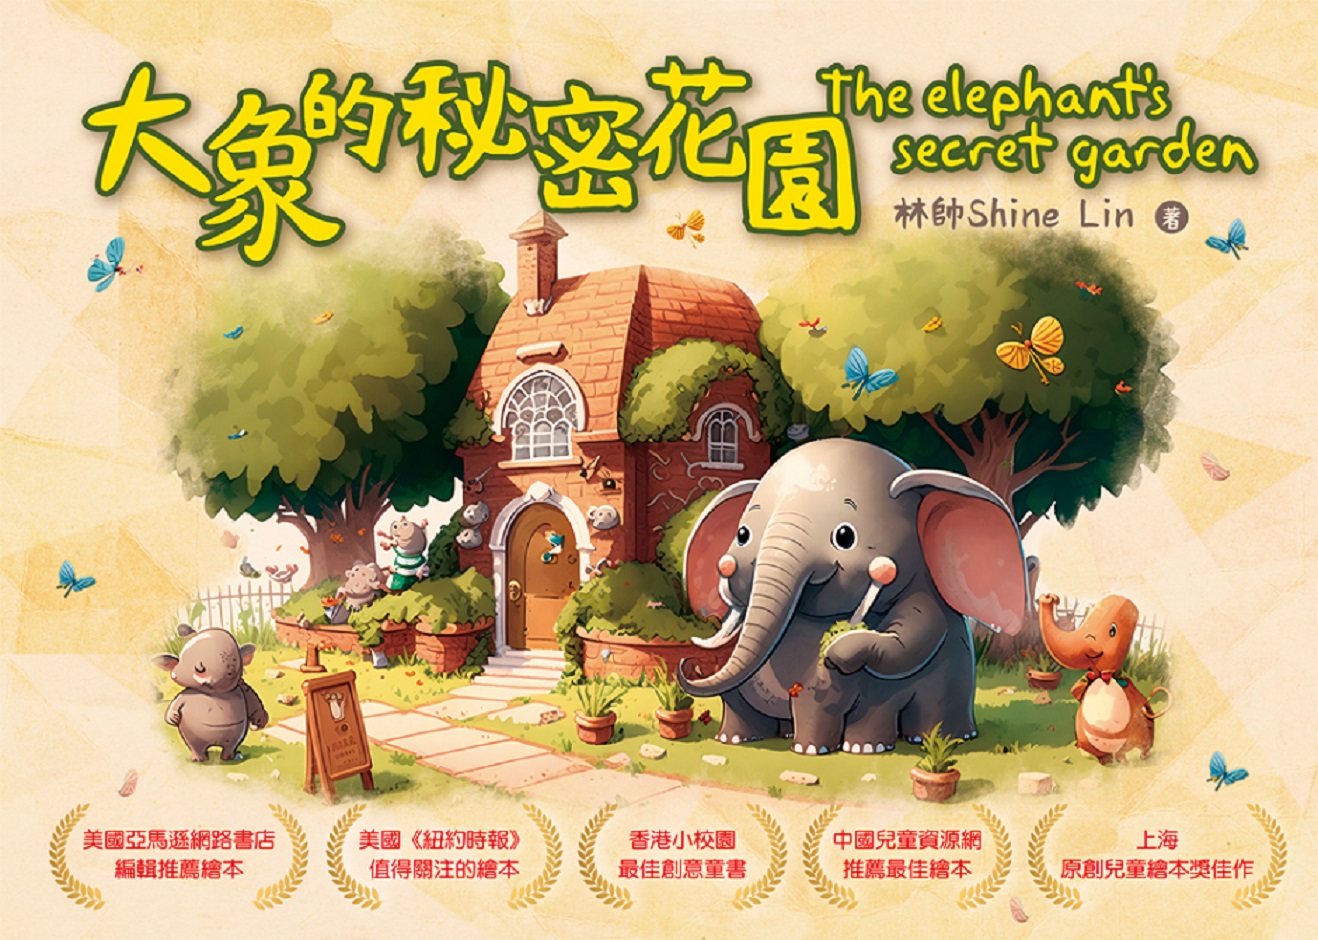 大象的秘密花園 The elephant's secret garden